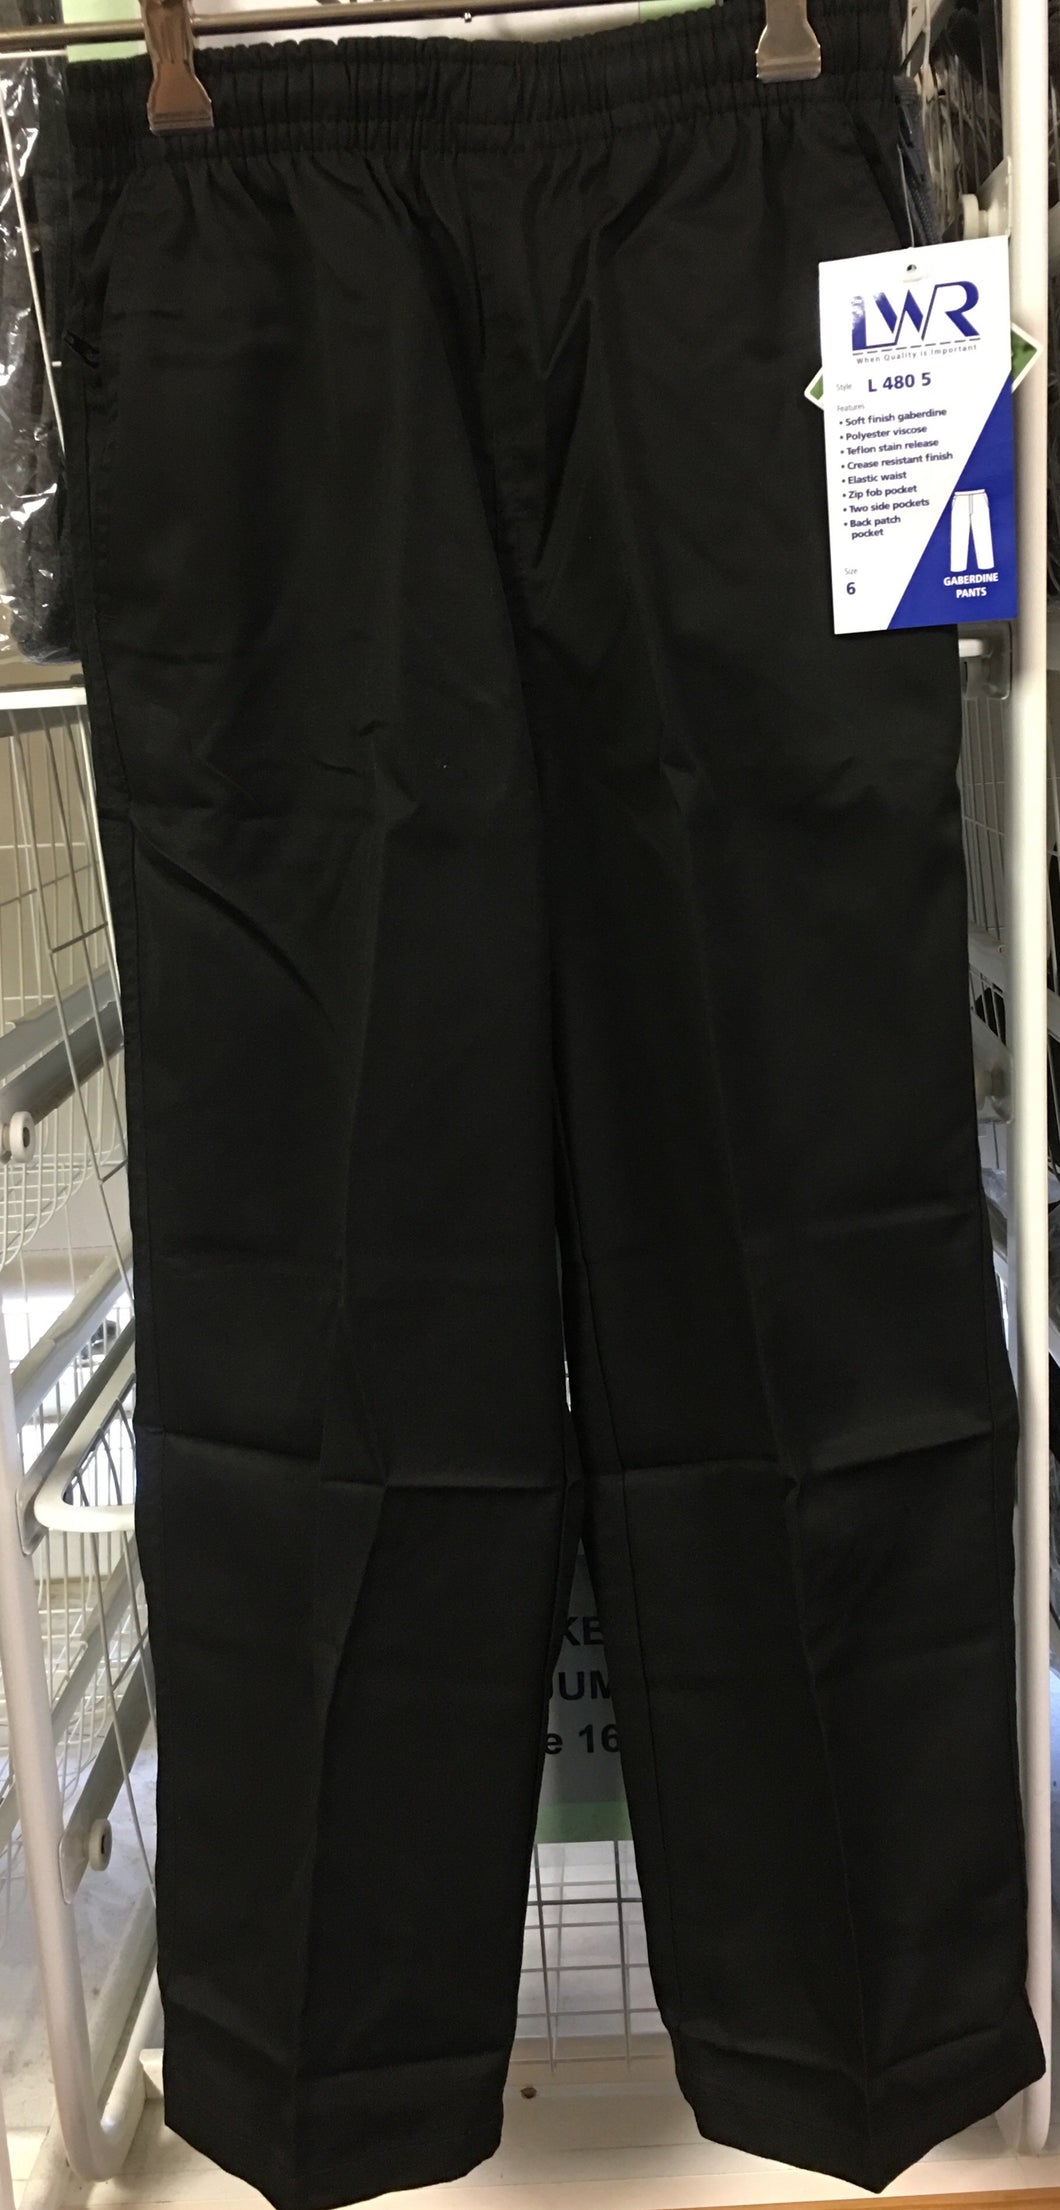 Long black pants